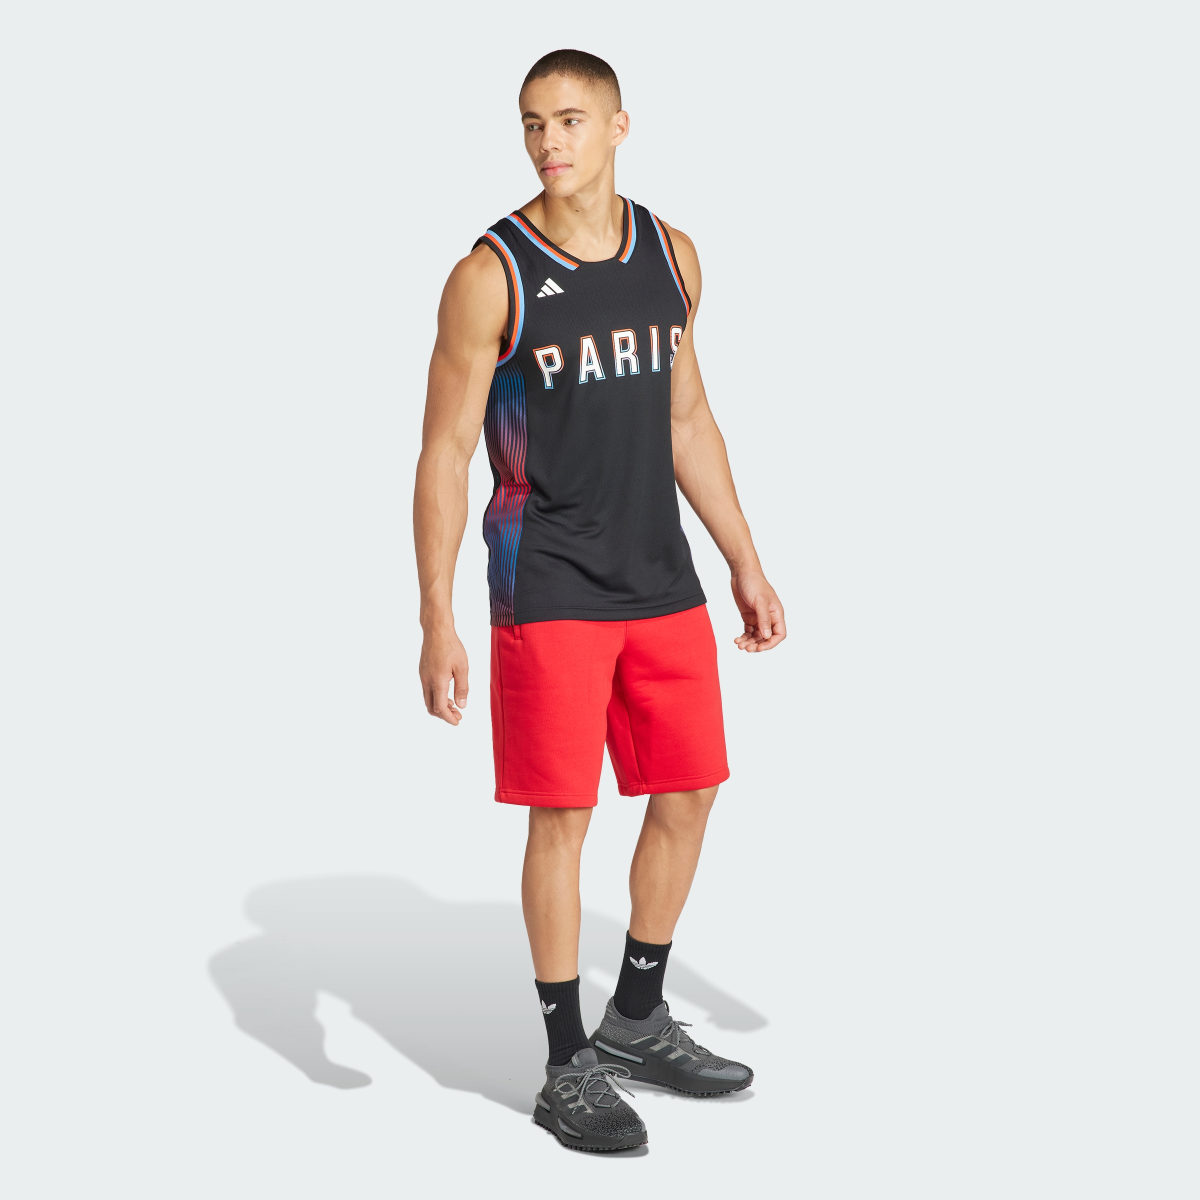 Adidas Camiseta Paris Basketball AEROREADY. 4